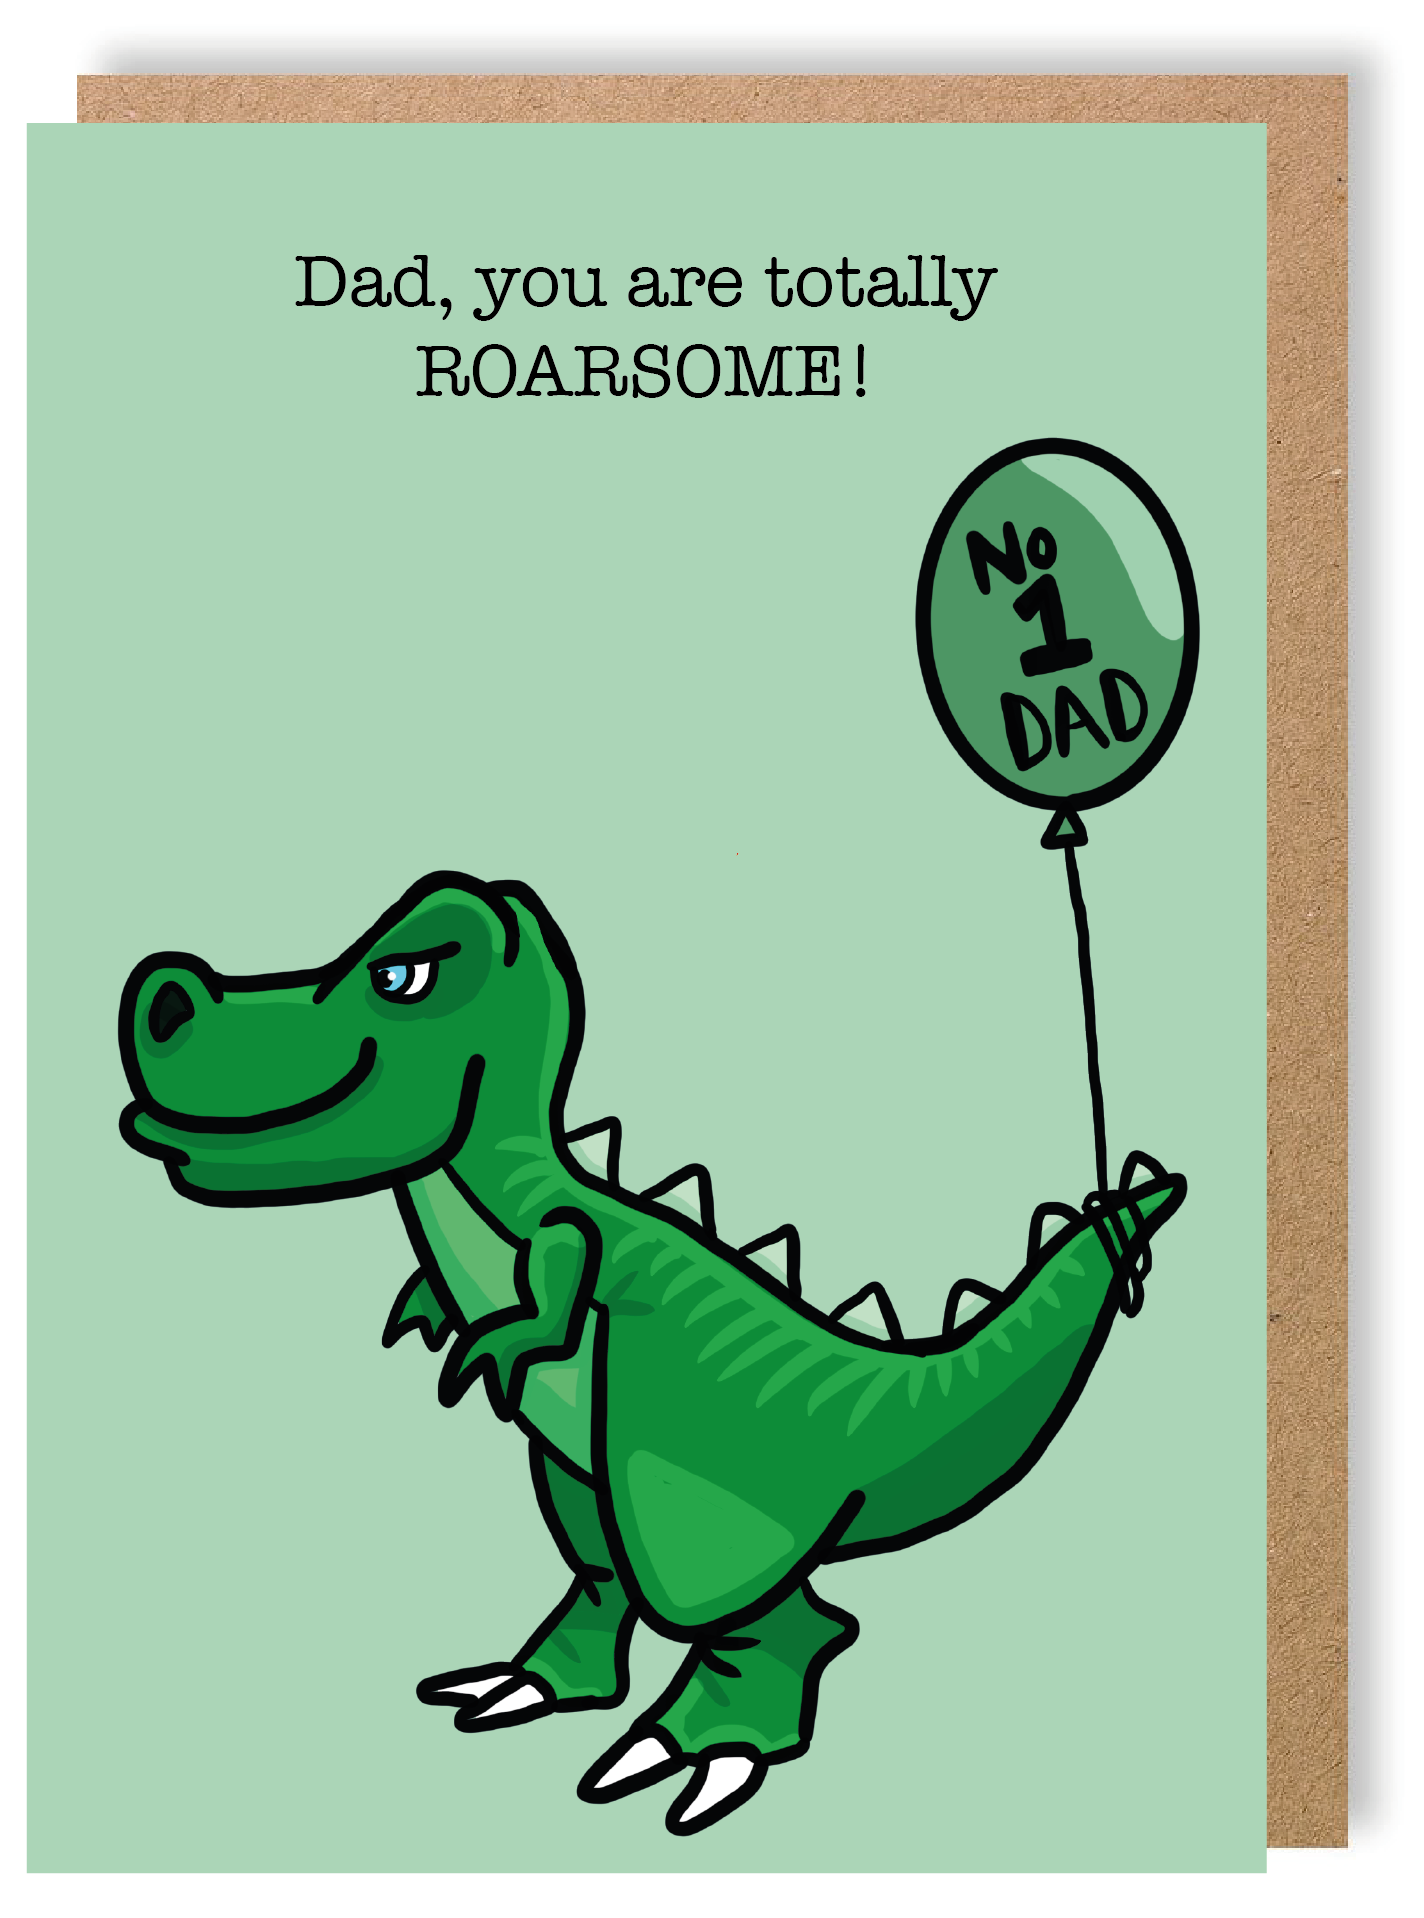 Roarsome Dad - Dinosaur - Greetings Card - LukeHorton Art